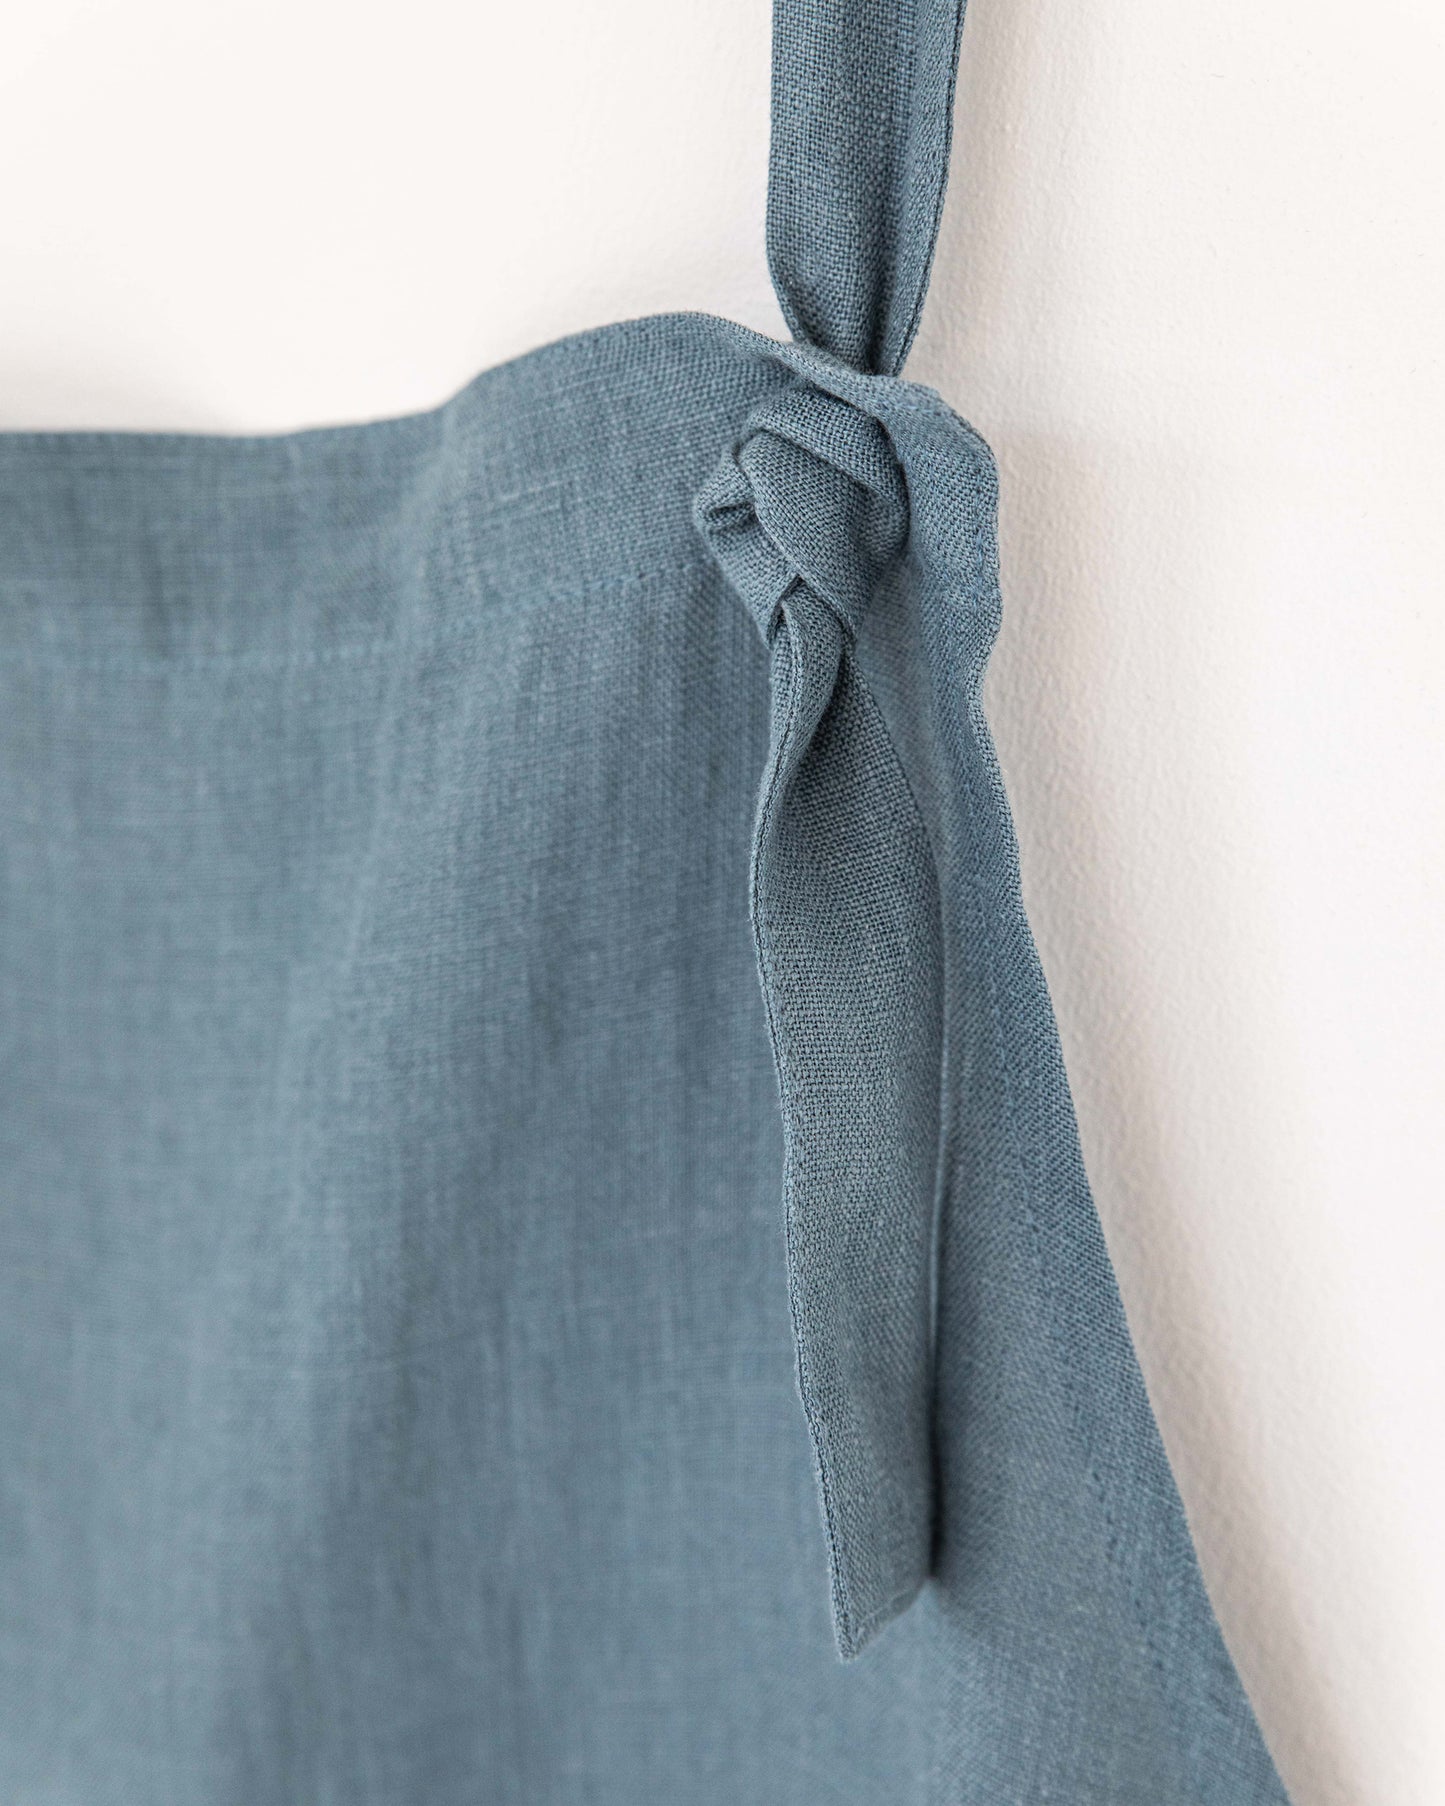 Men's linen bib apron in Gray blue - MagicLinen